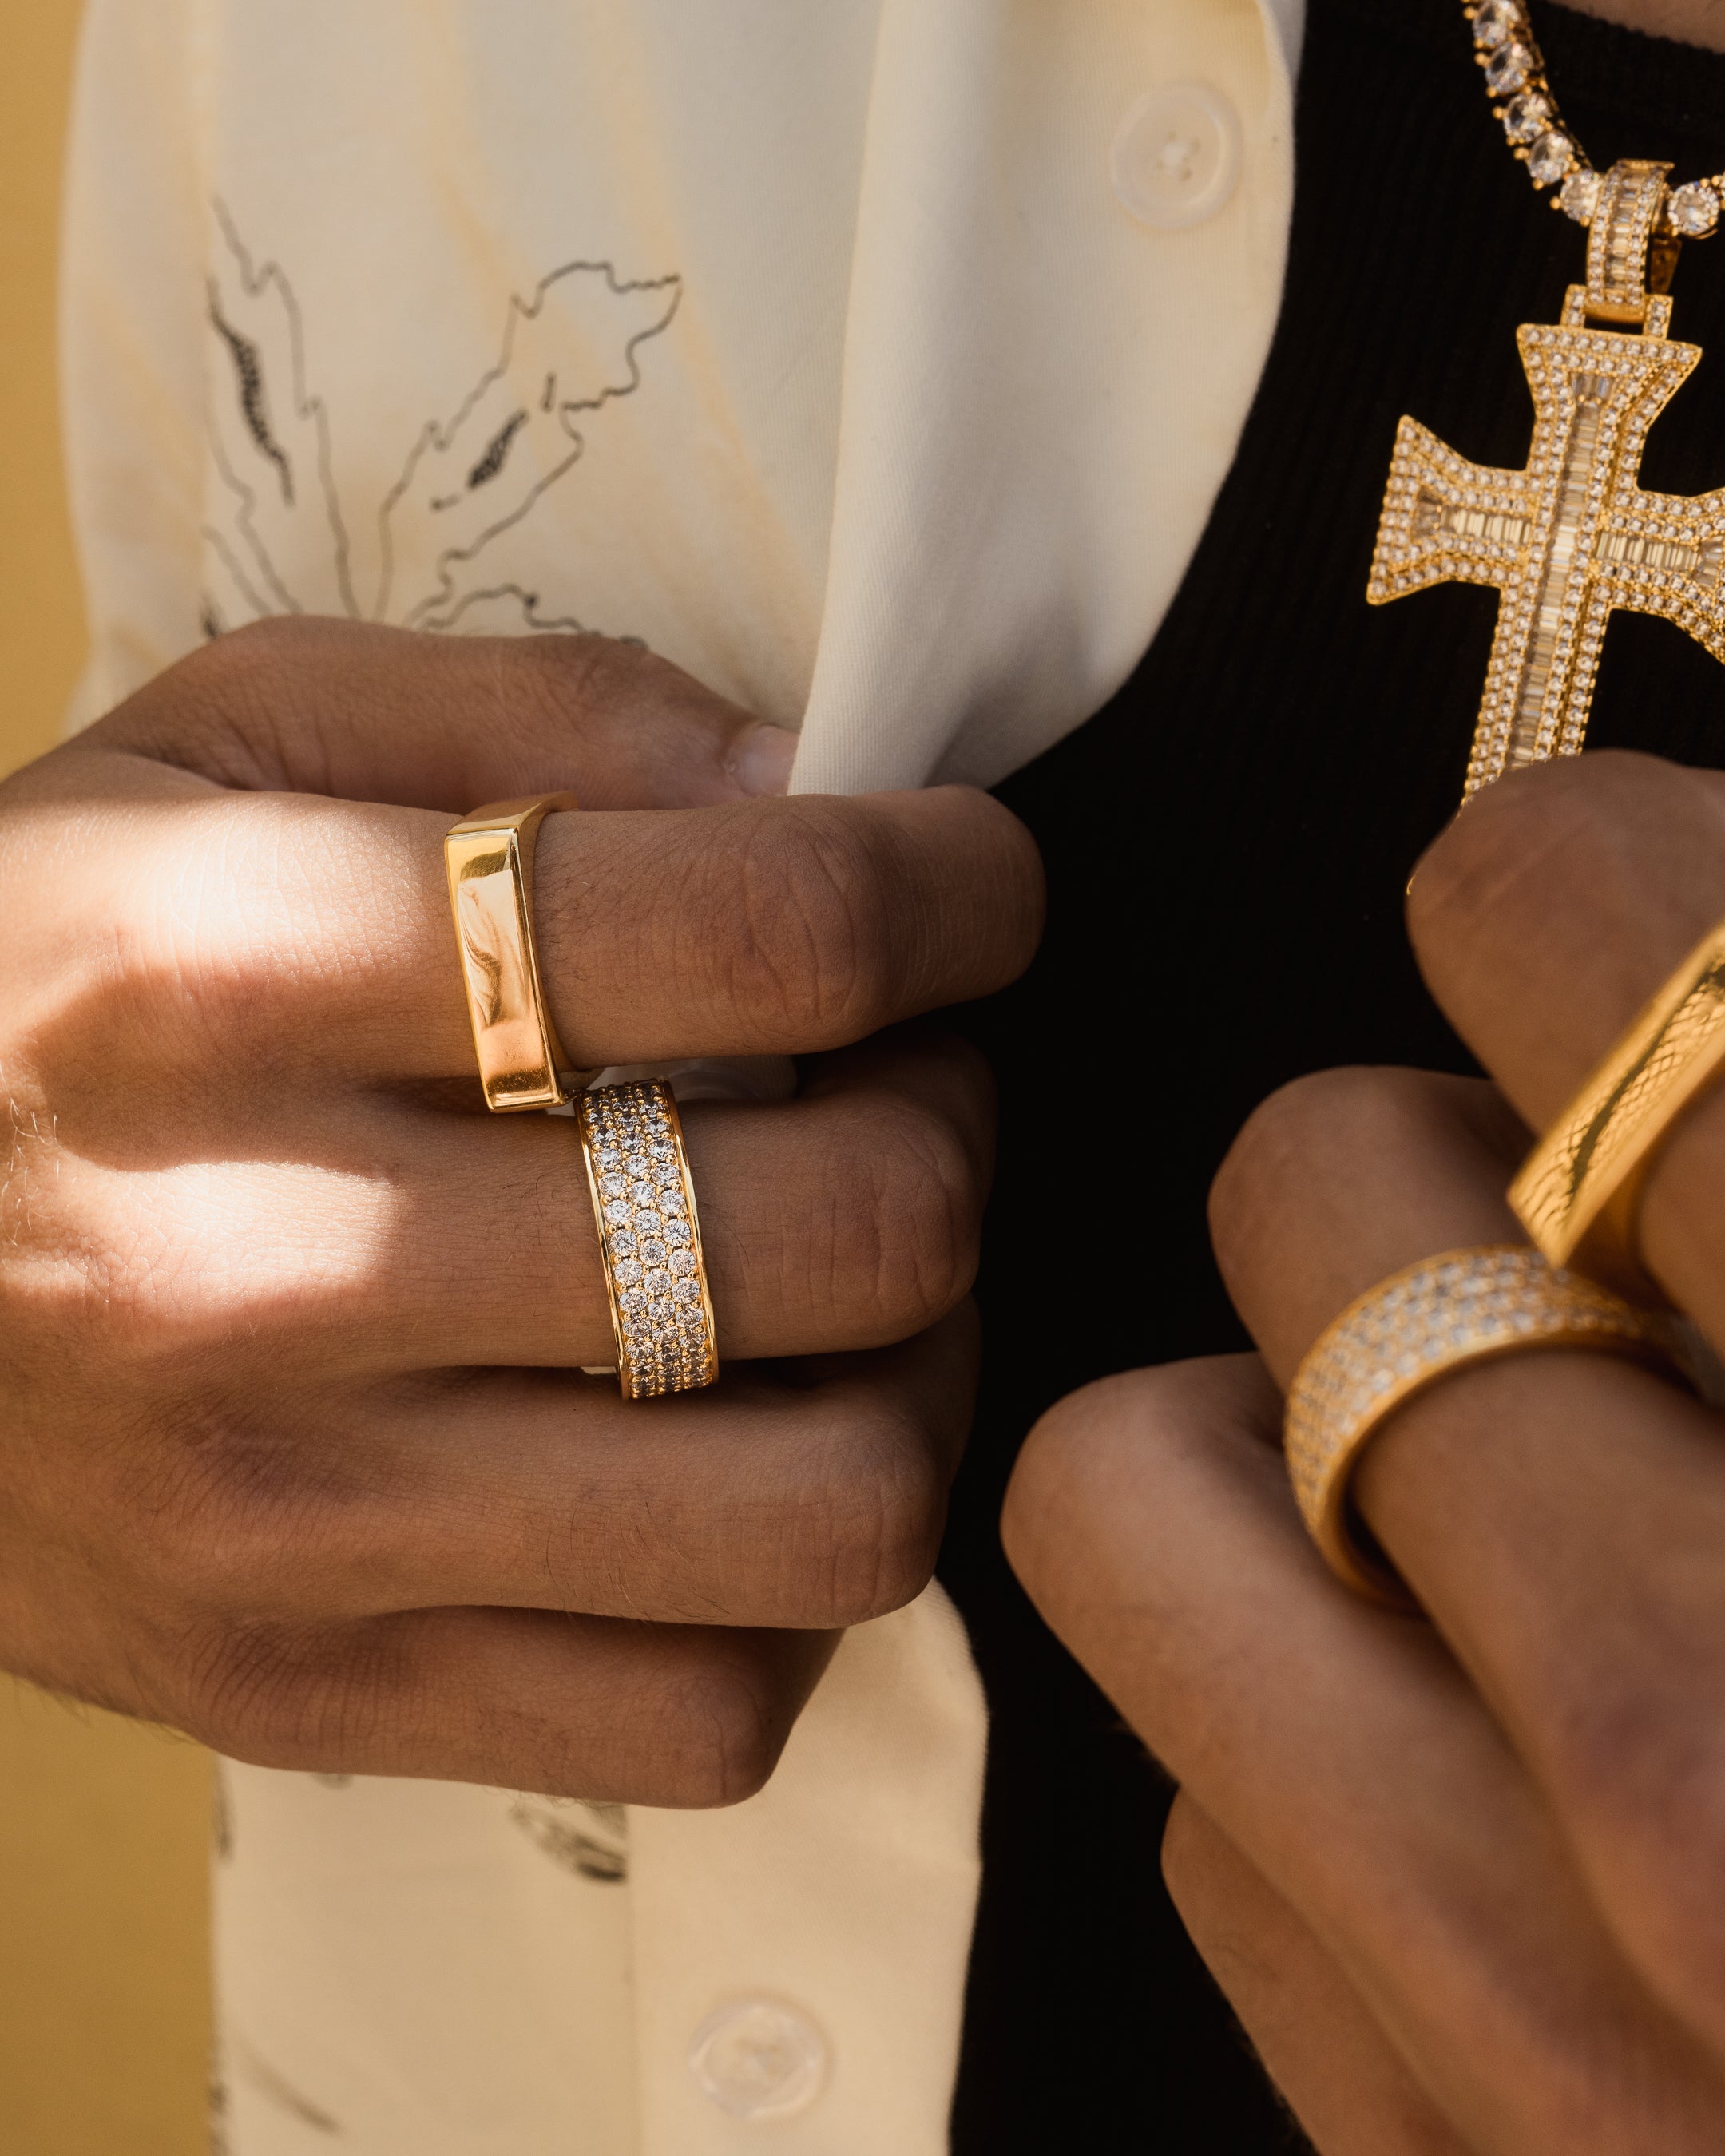 Louis Vuitton Men's Ring  Mens rings fashion, Rings for men, Hipster rings